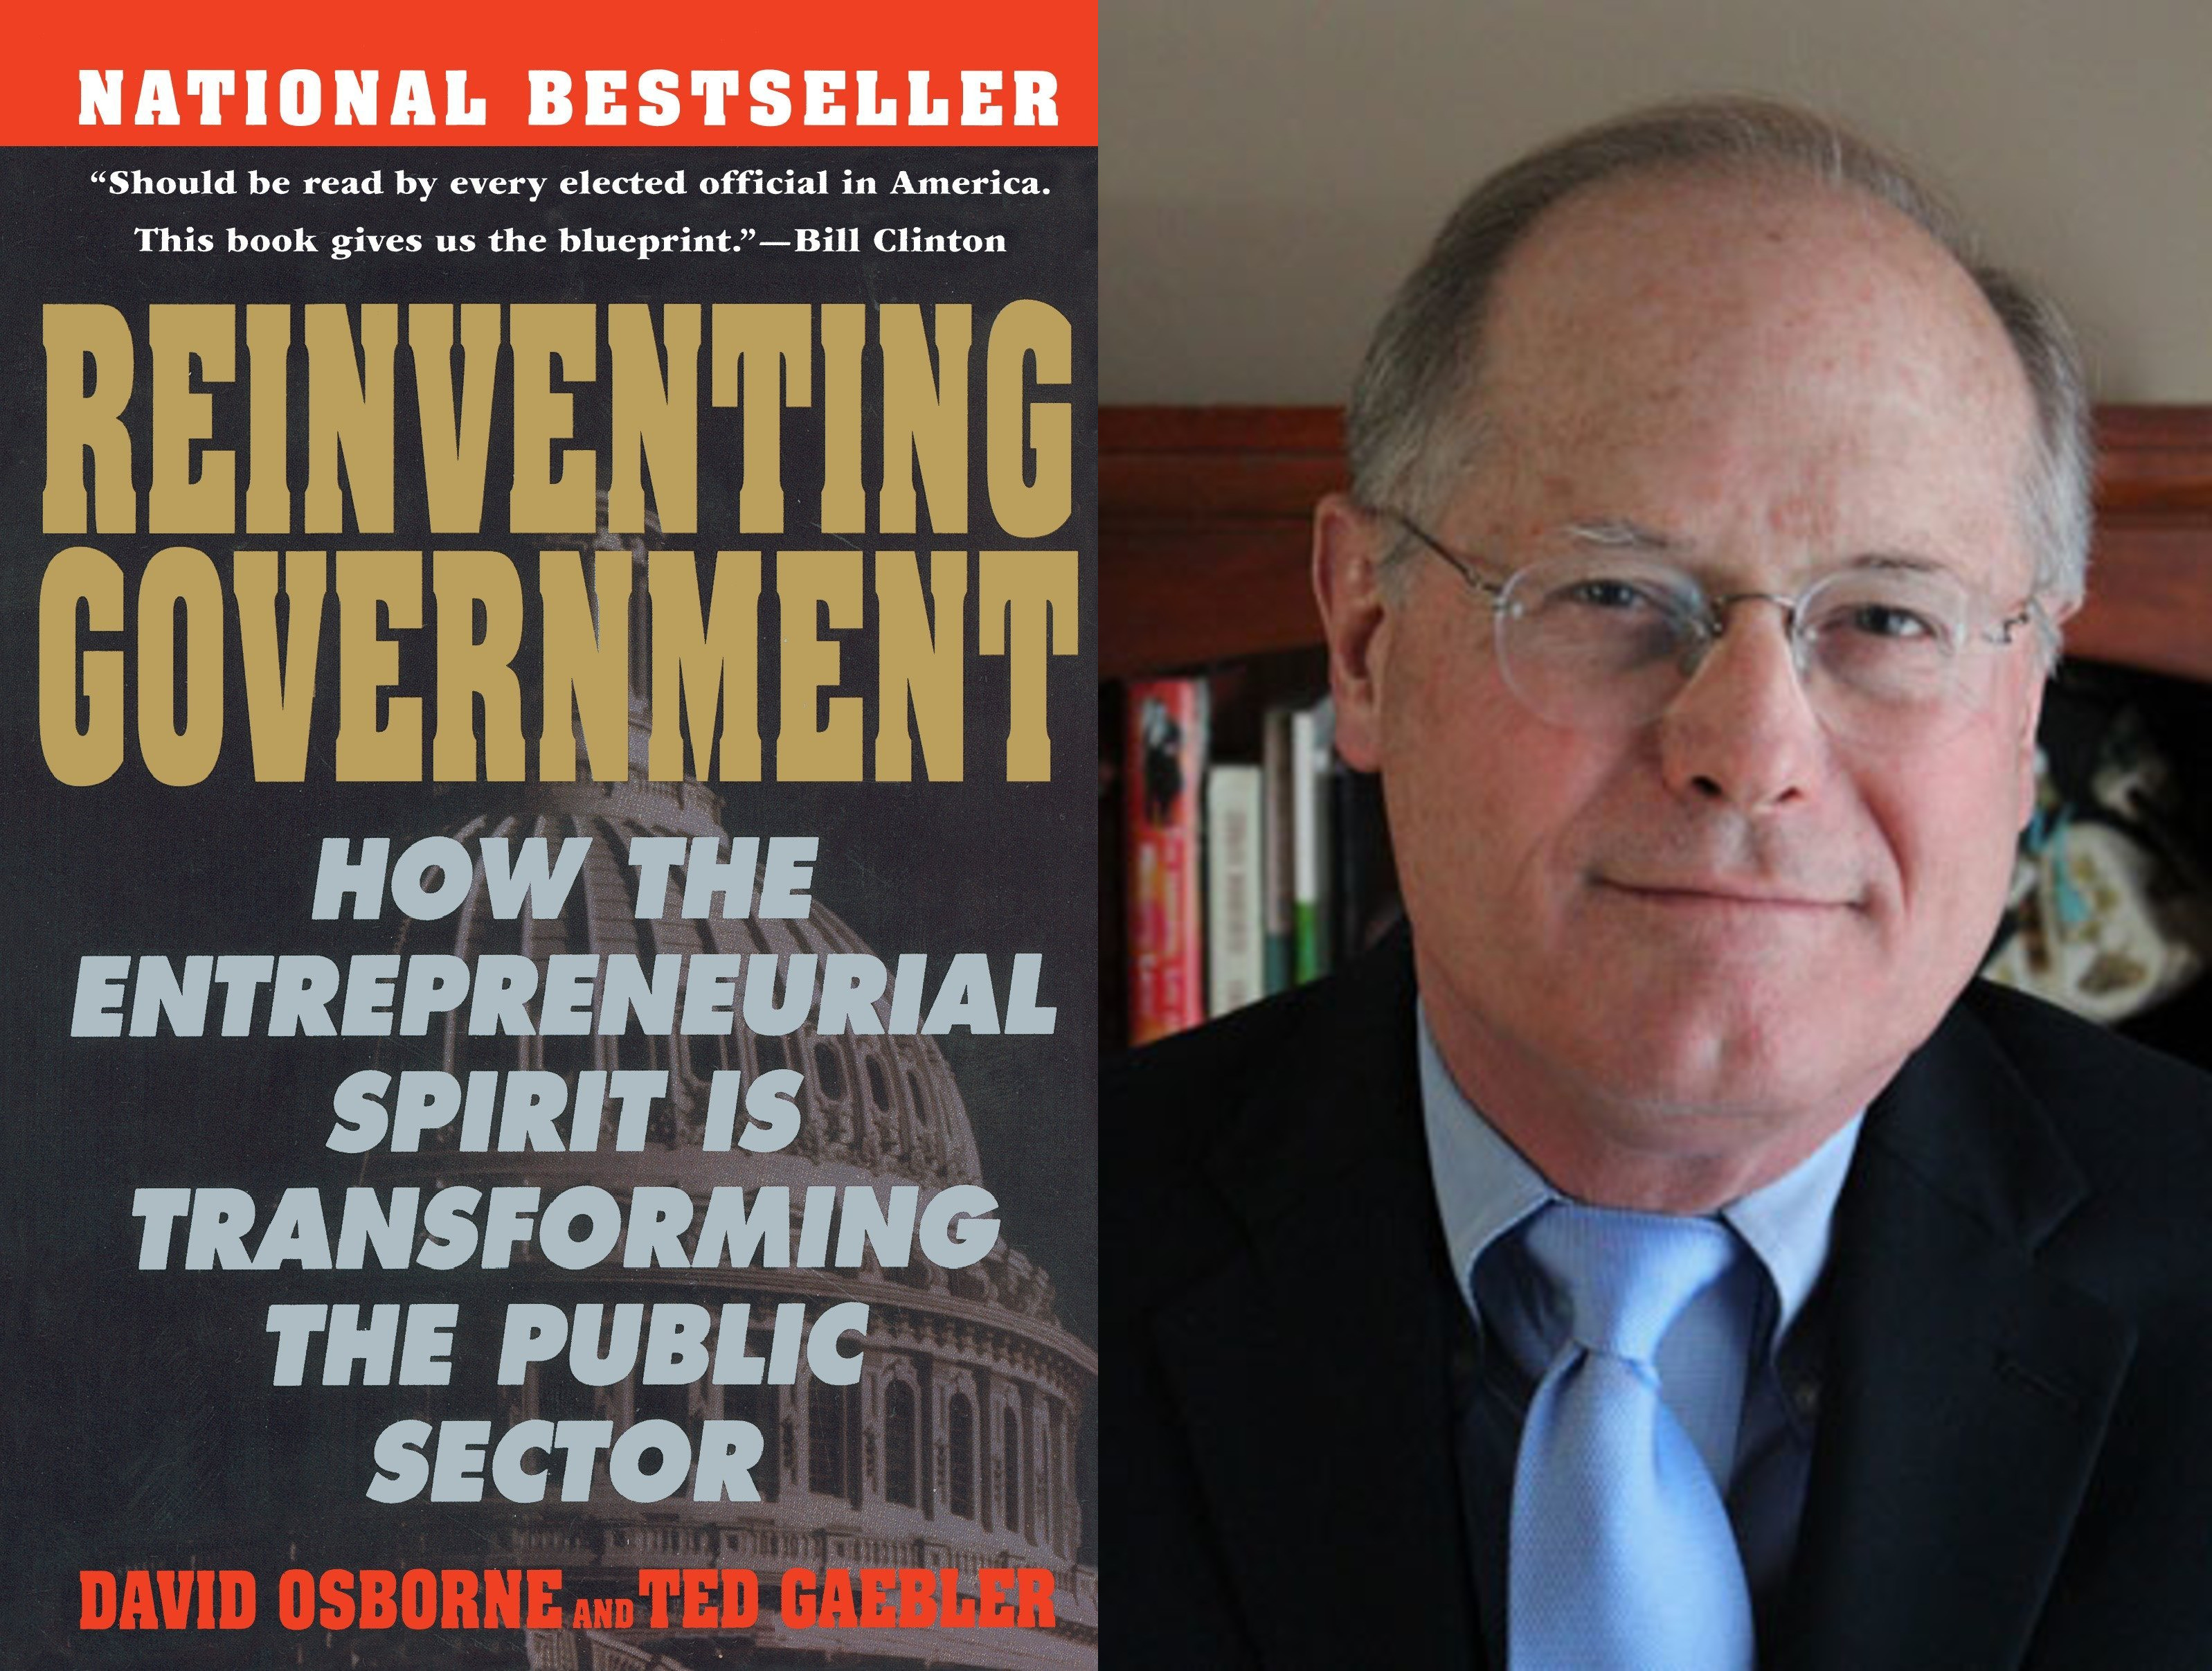 D. Osborne, T. Gaebler&nbsp;— Reinventing Government: How the Entrepreneurial Spirit is Transforming the Public Sector